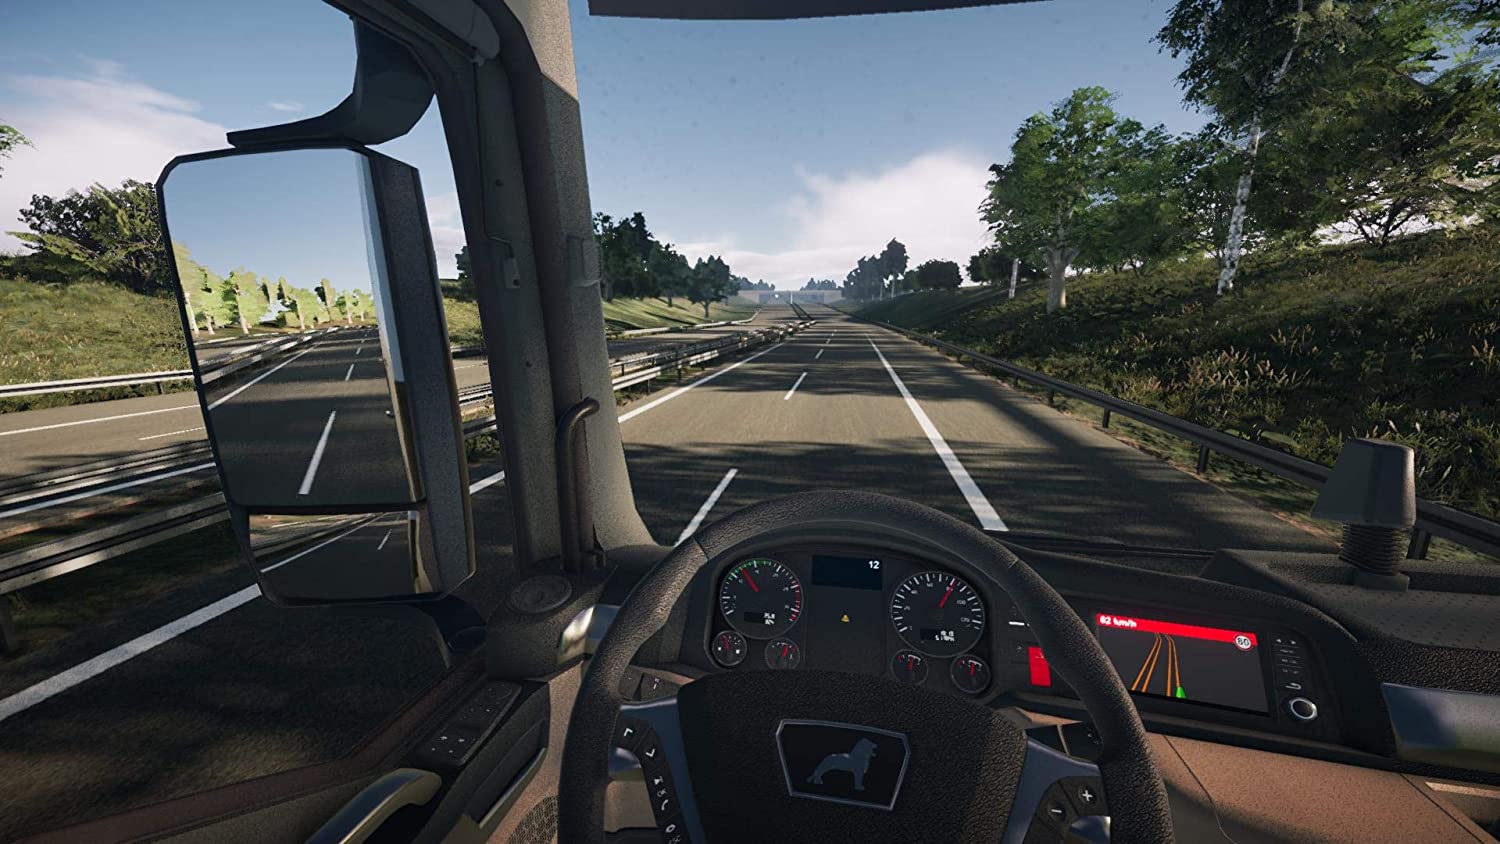 Xbox road. On the Road – Truck Simulation игра. Truck Simulator ps4. On the Road Truck Simulator для PLAYSTATION 4. Евро трак симулятор на ПС 4.